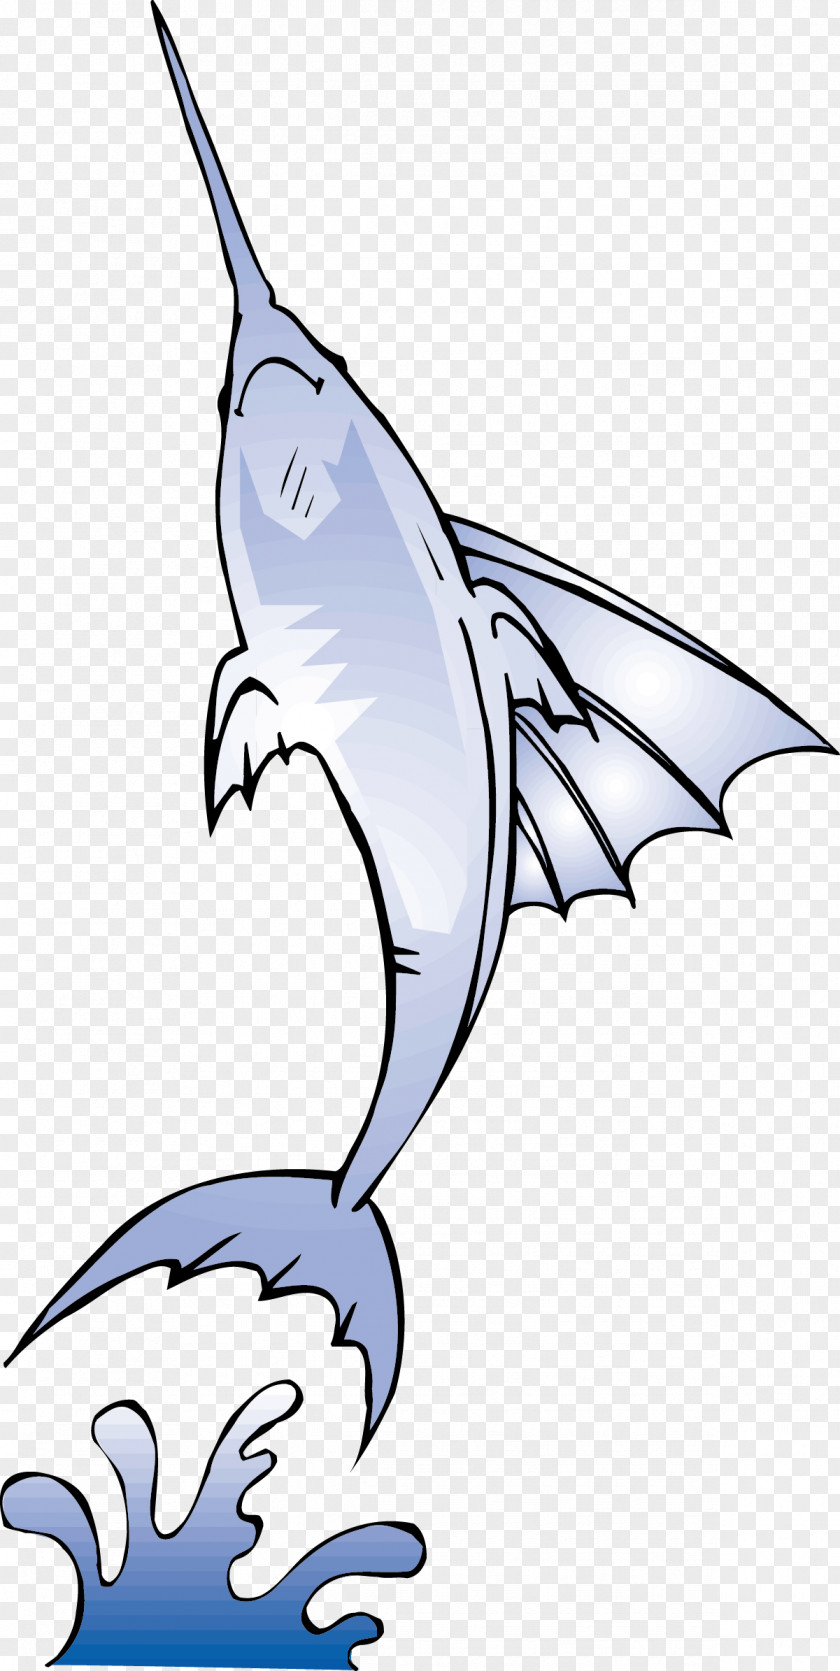 Sharp Fish Mouth Vector Diagram Of Shark Cartoon Clip Art PNG